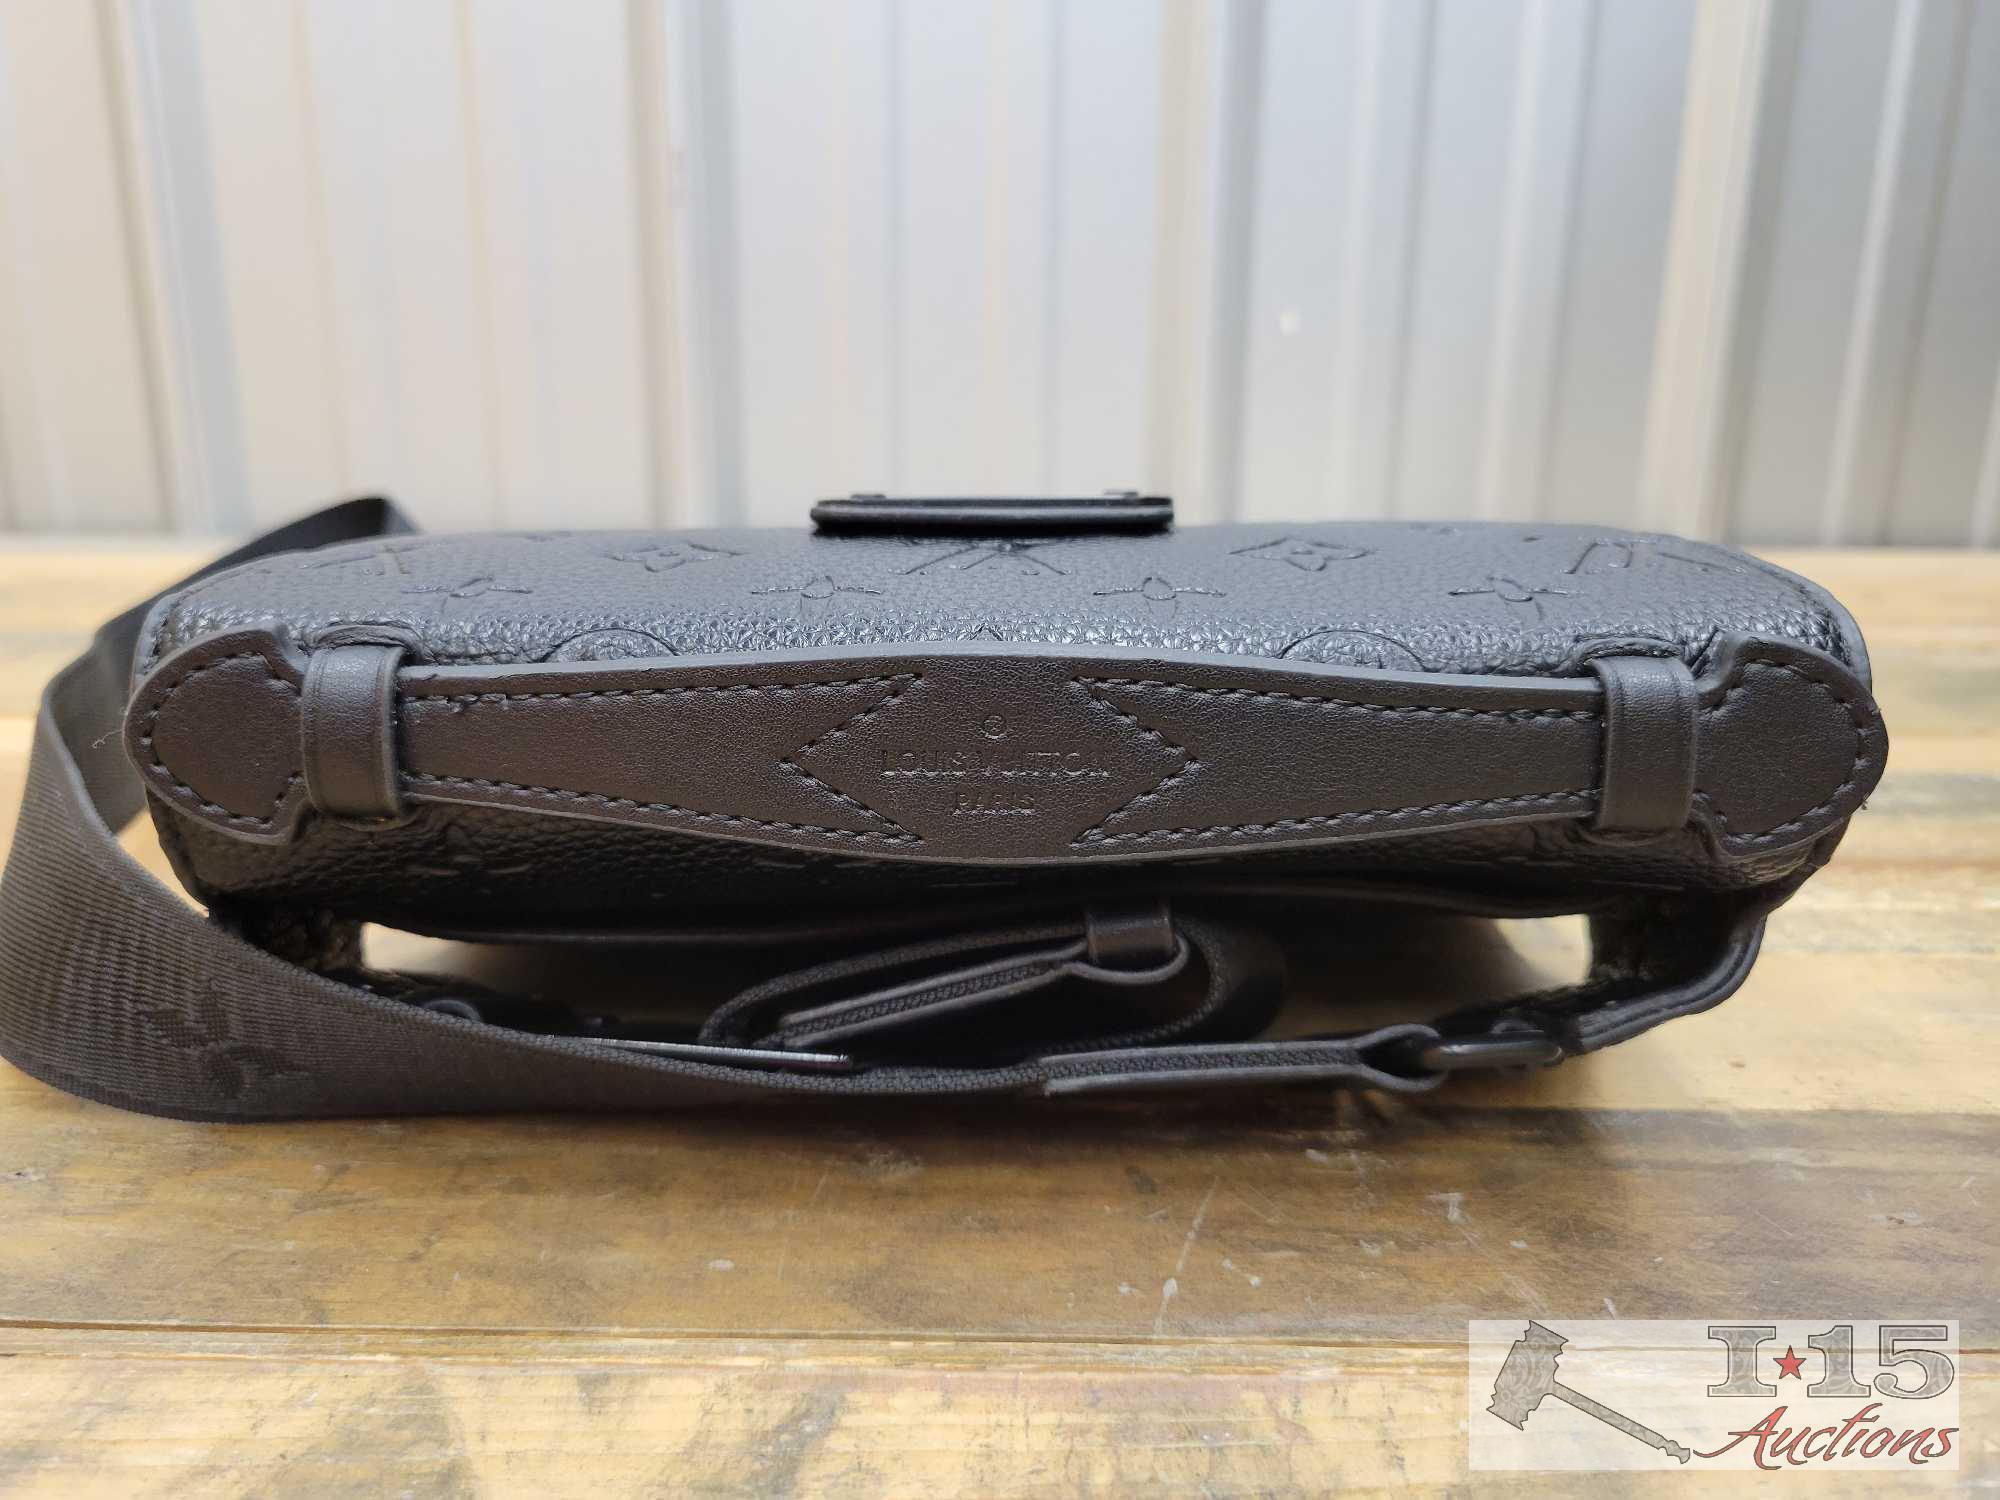 Louis Vuitton Danube Messenger Bag Limited Edition Charm Leather Ppm Black